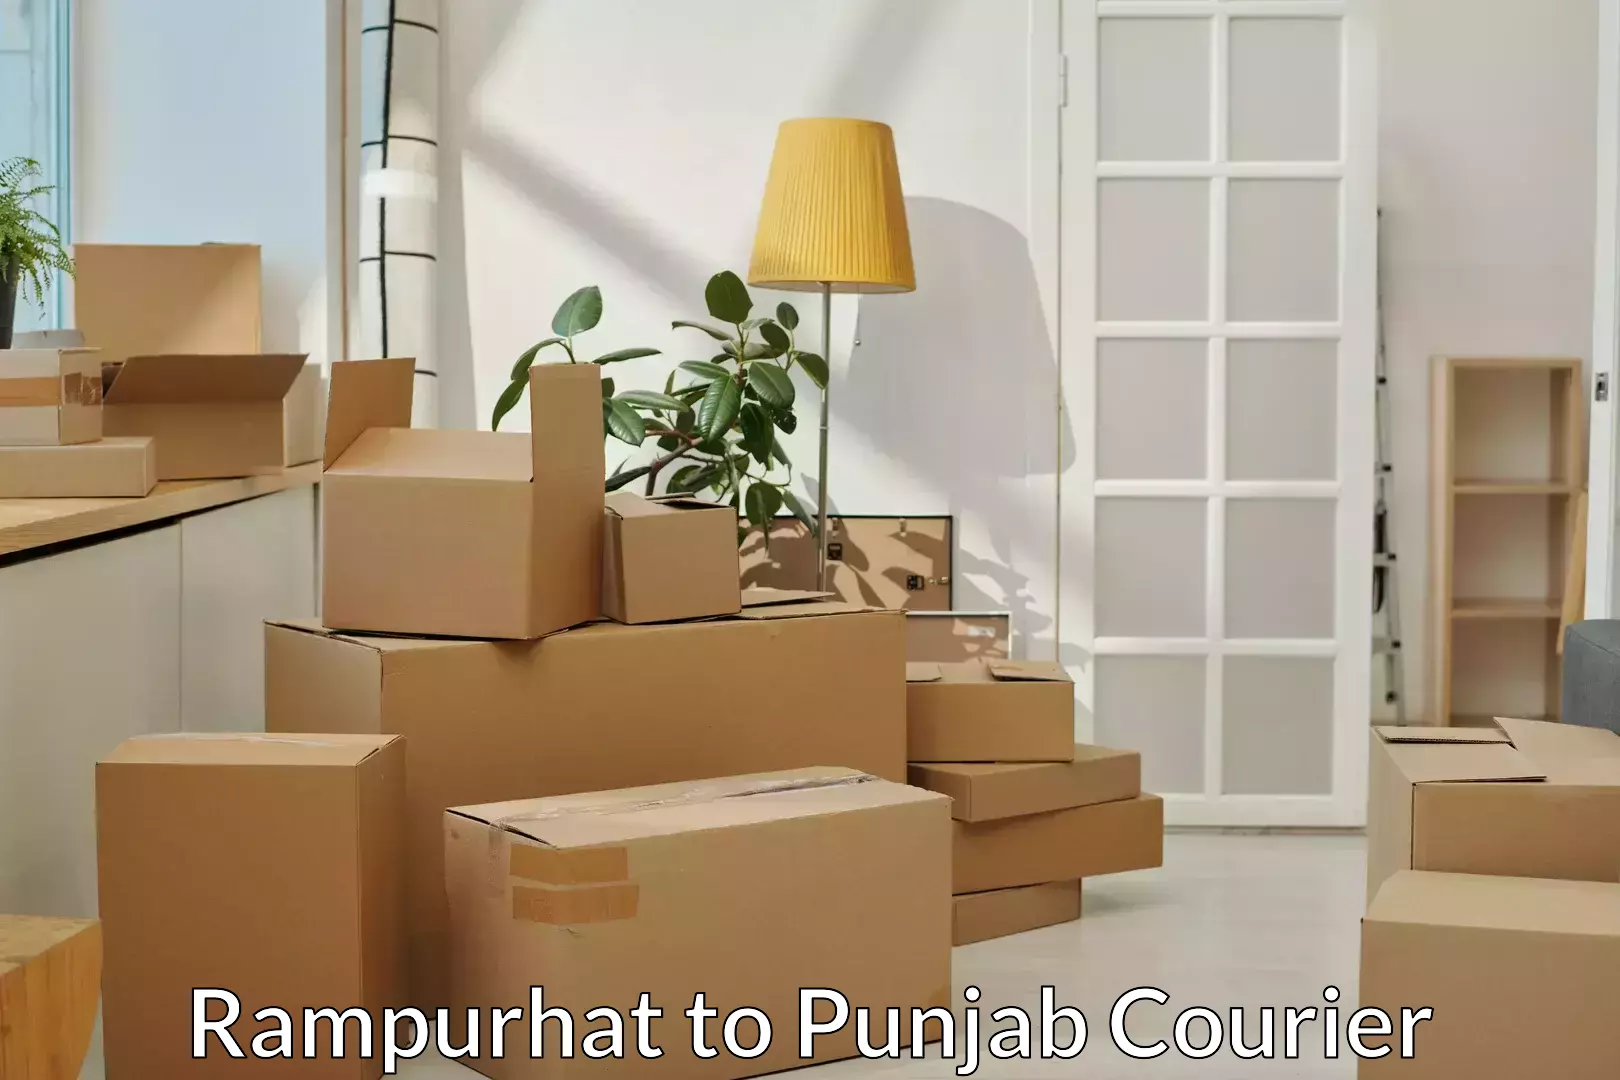 Skilled furniture transporters Rampurhat to Mohali